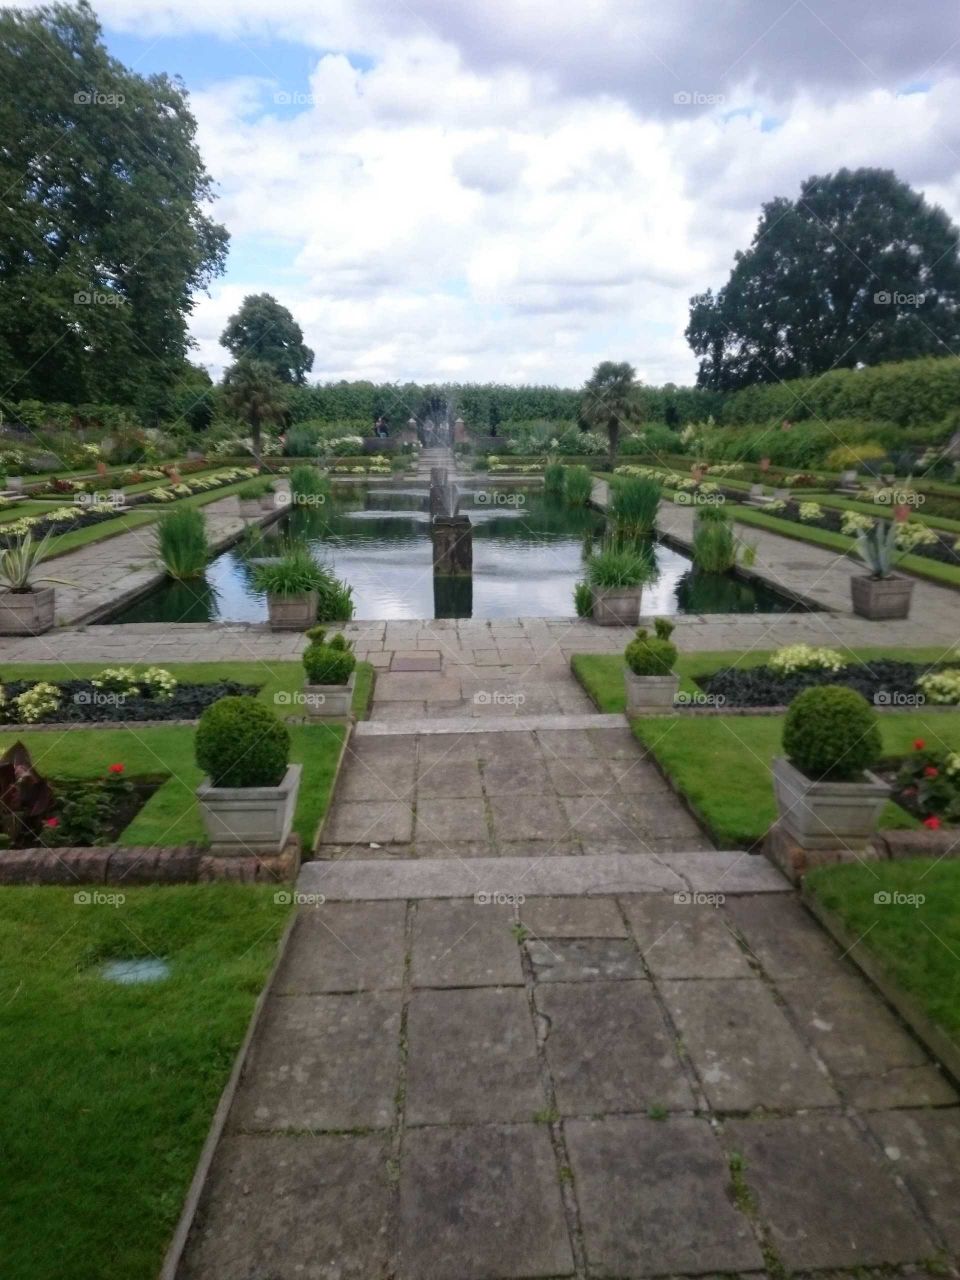 Kensington palace garden